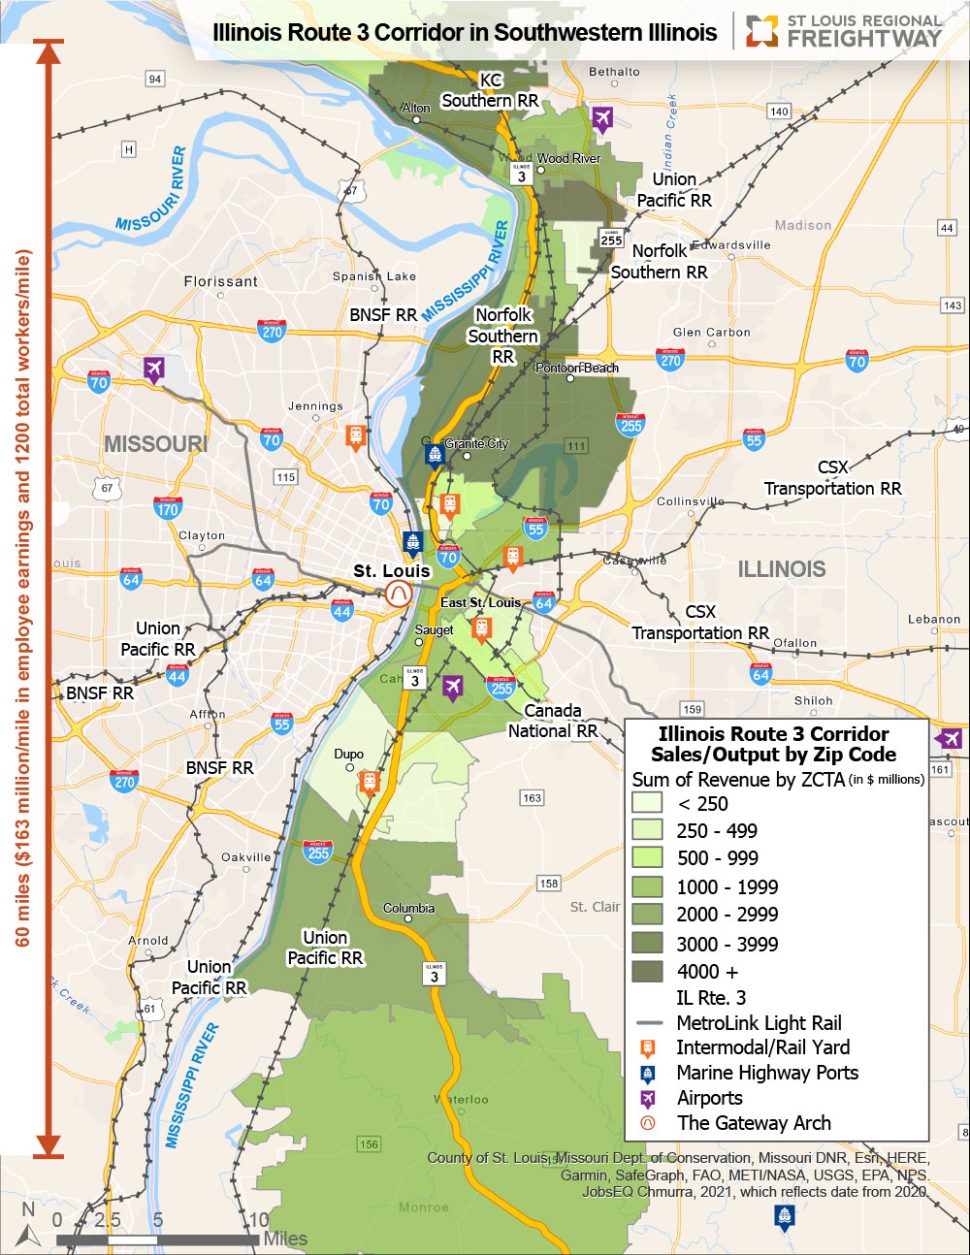 Click here to open the document Illinois Route 3 Corridor in Southwestern Illinois.